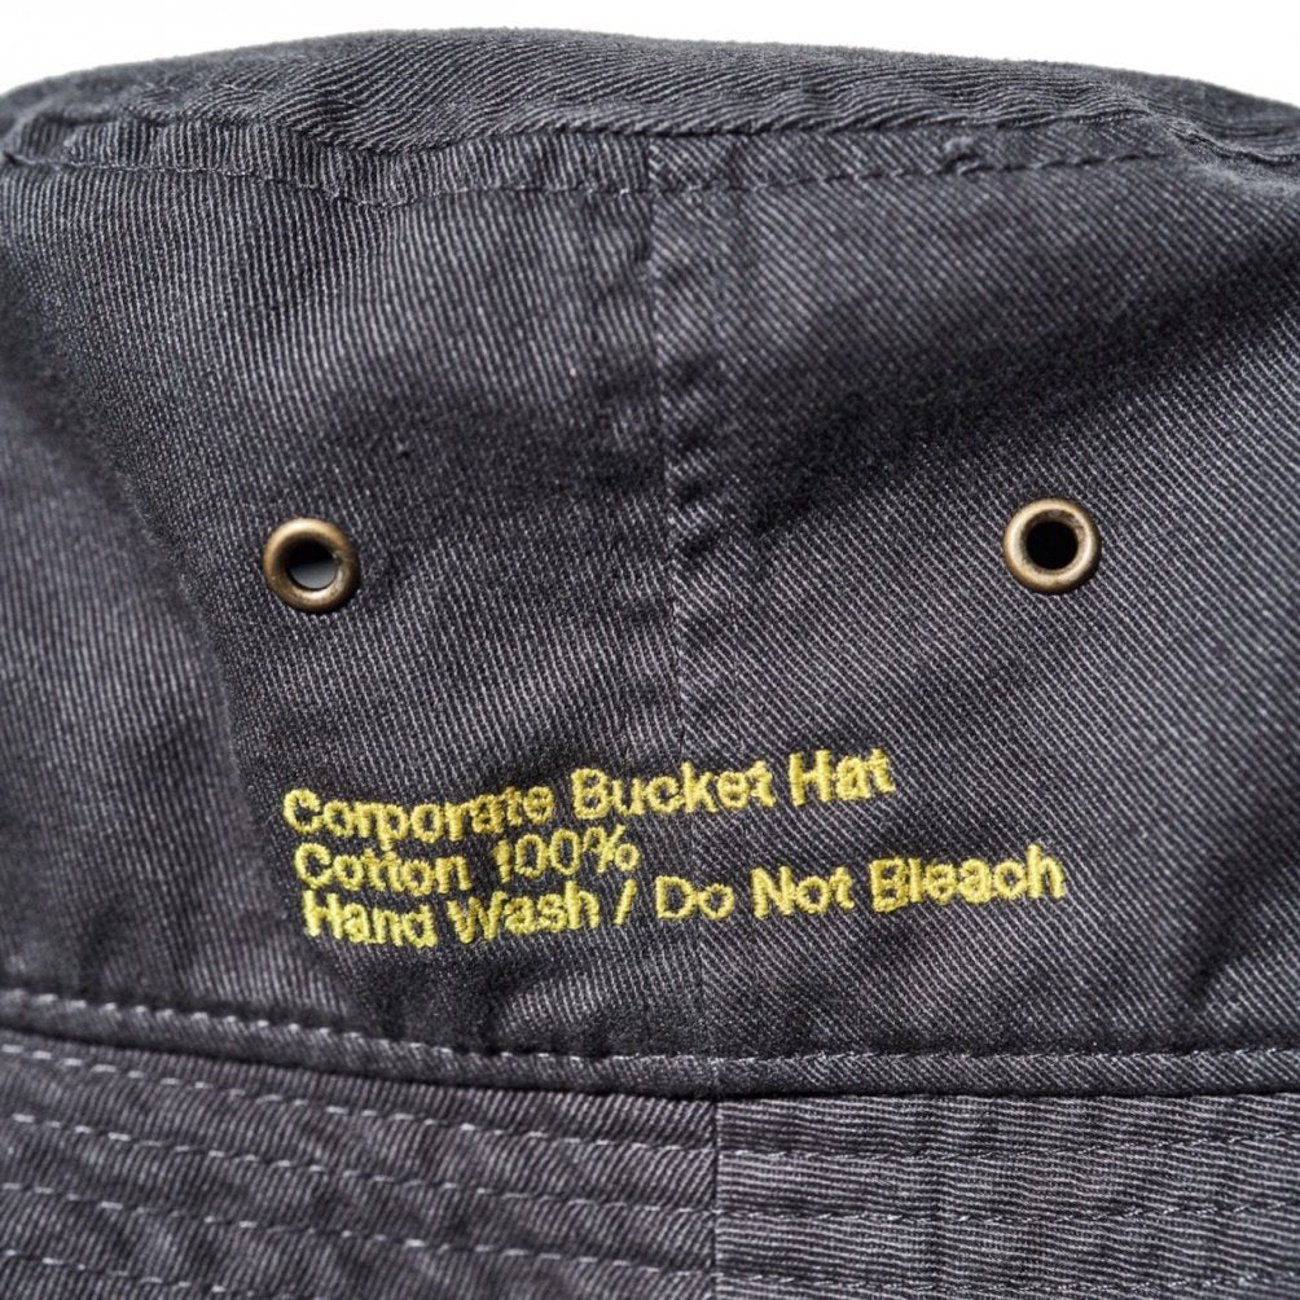 FreshService * CORPORATE BUCKET HAT(5Ÿ)